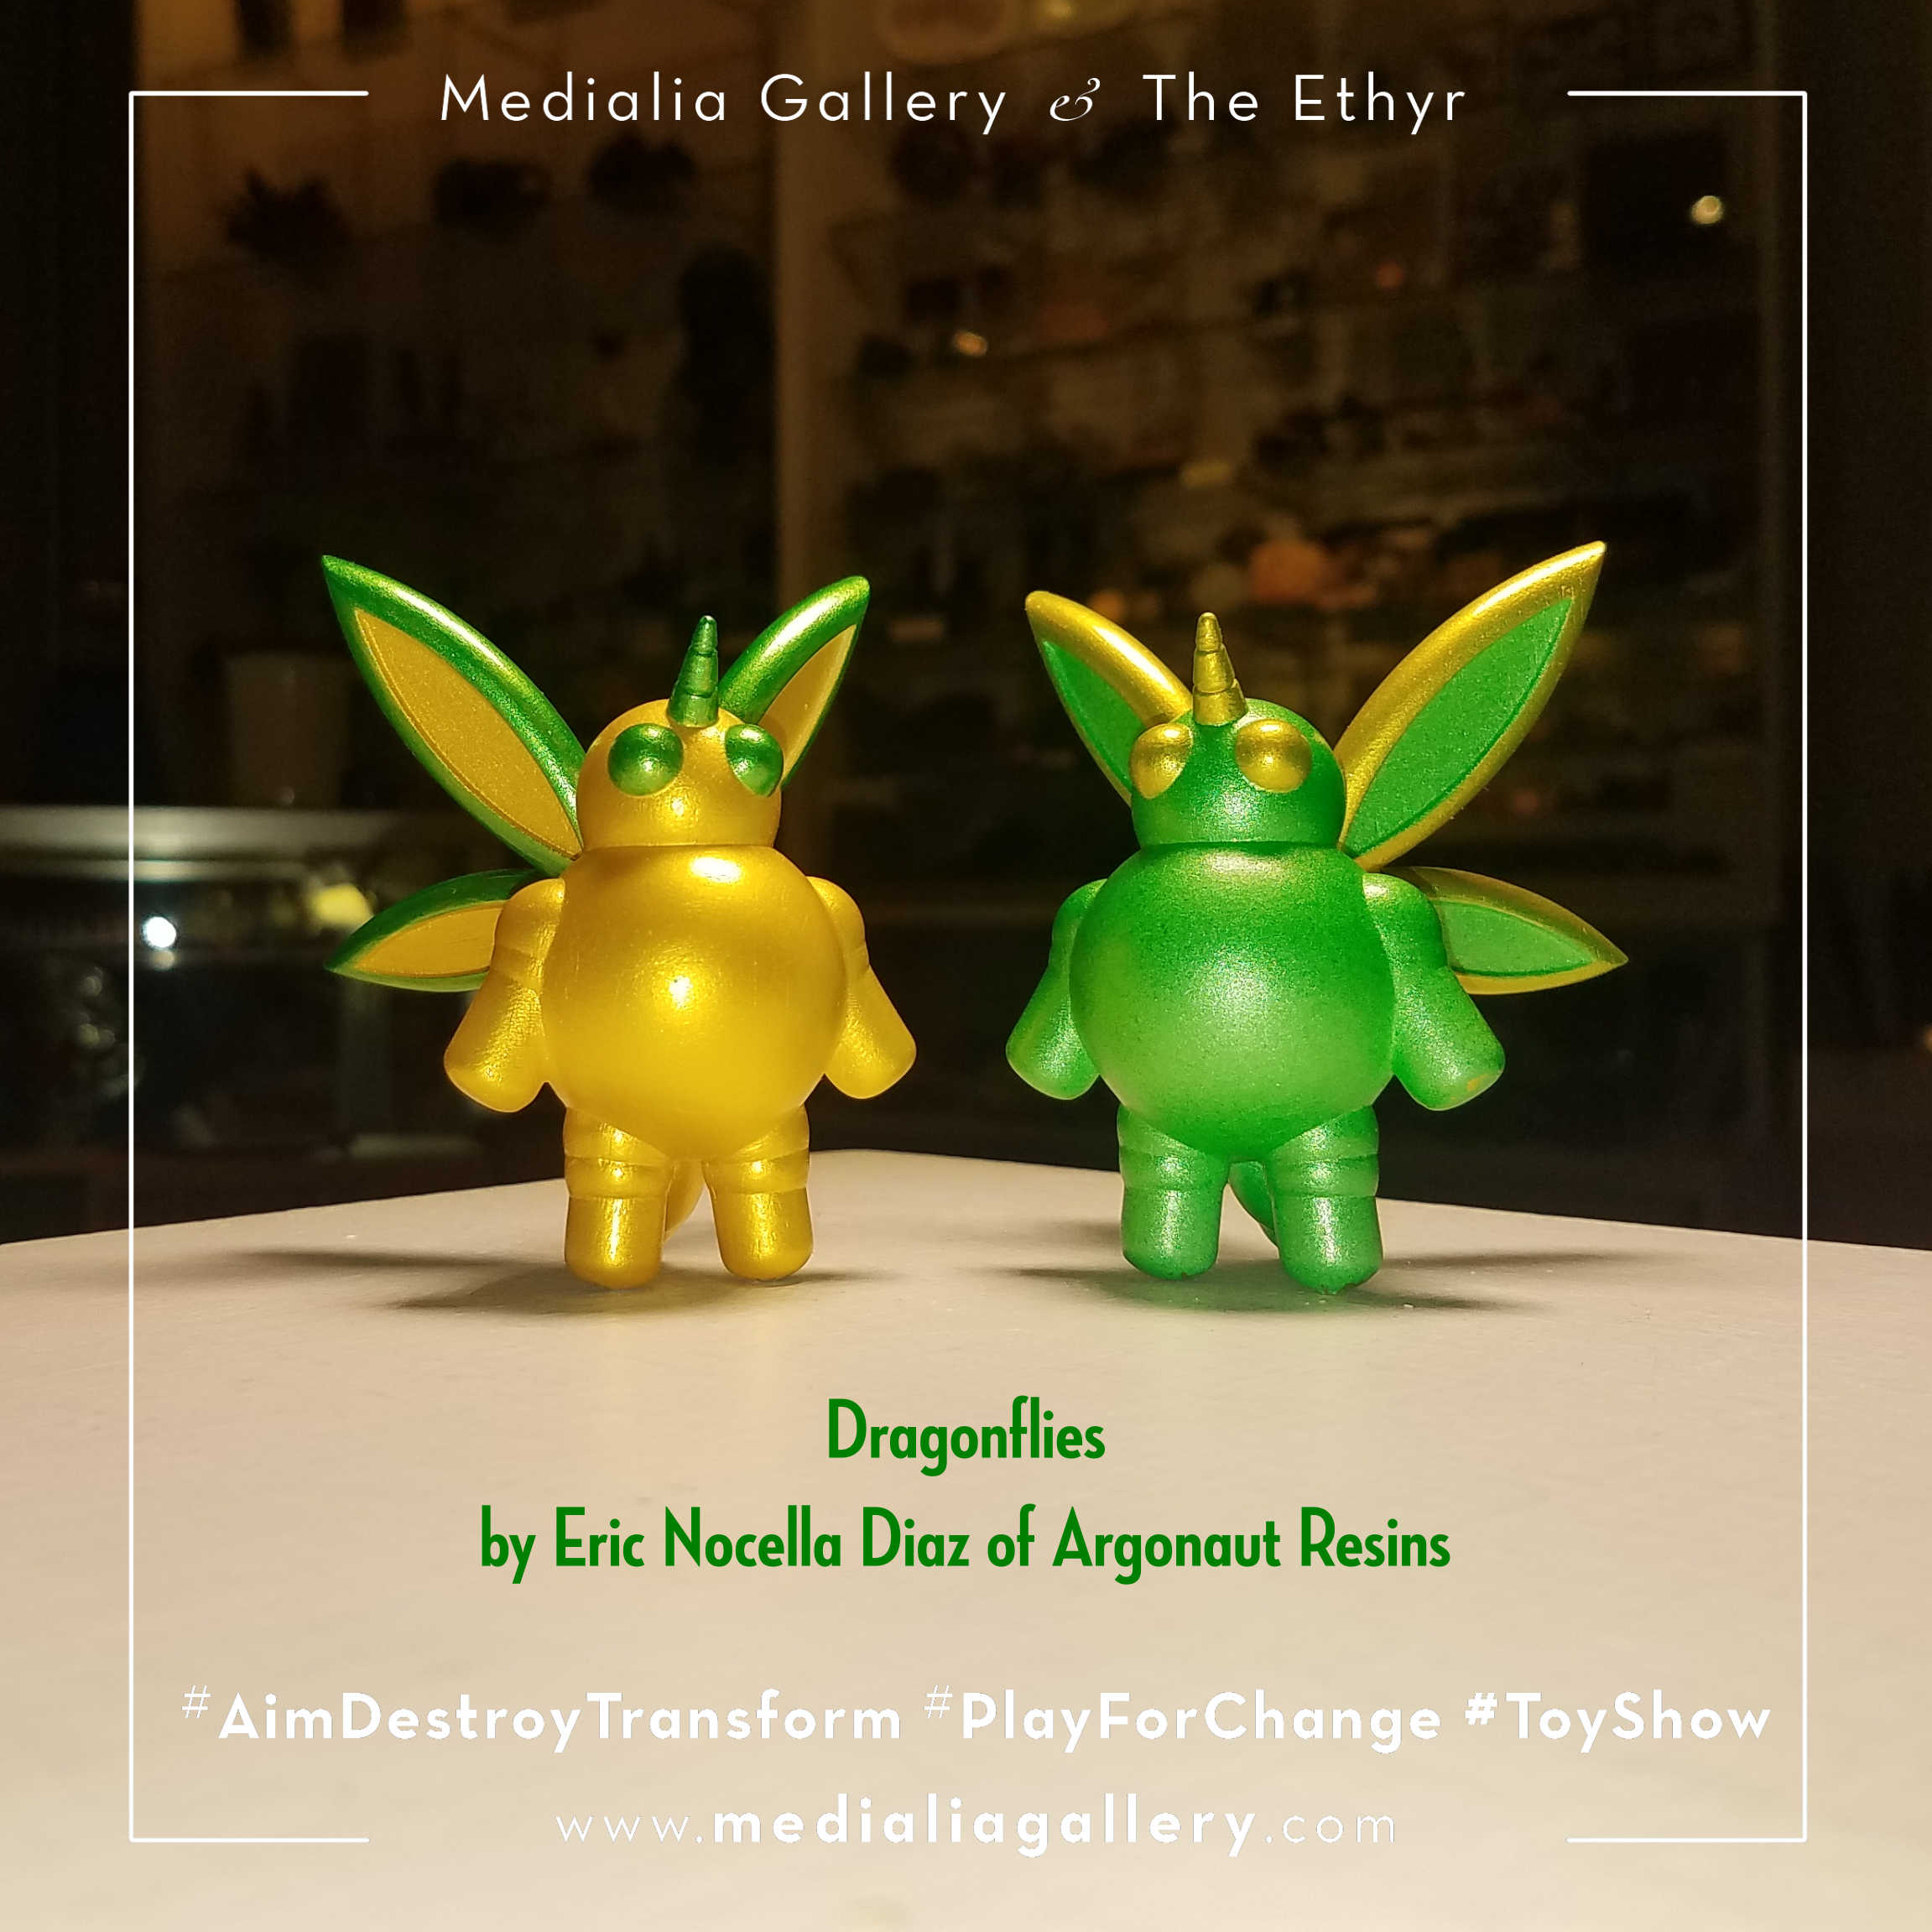 MedialiaGallery_The_Ethyr_AimDestroyTransform_Toy_Show_announcement_Dragonflies_Eric_Nocella_Diaz_Argonaut_Resins_November_2017.jpg.png